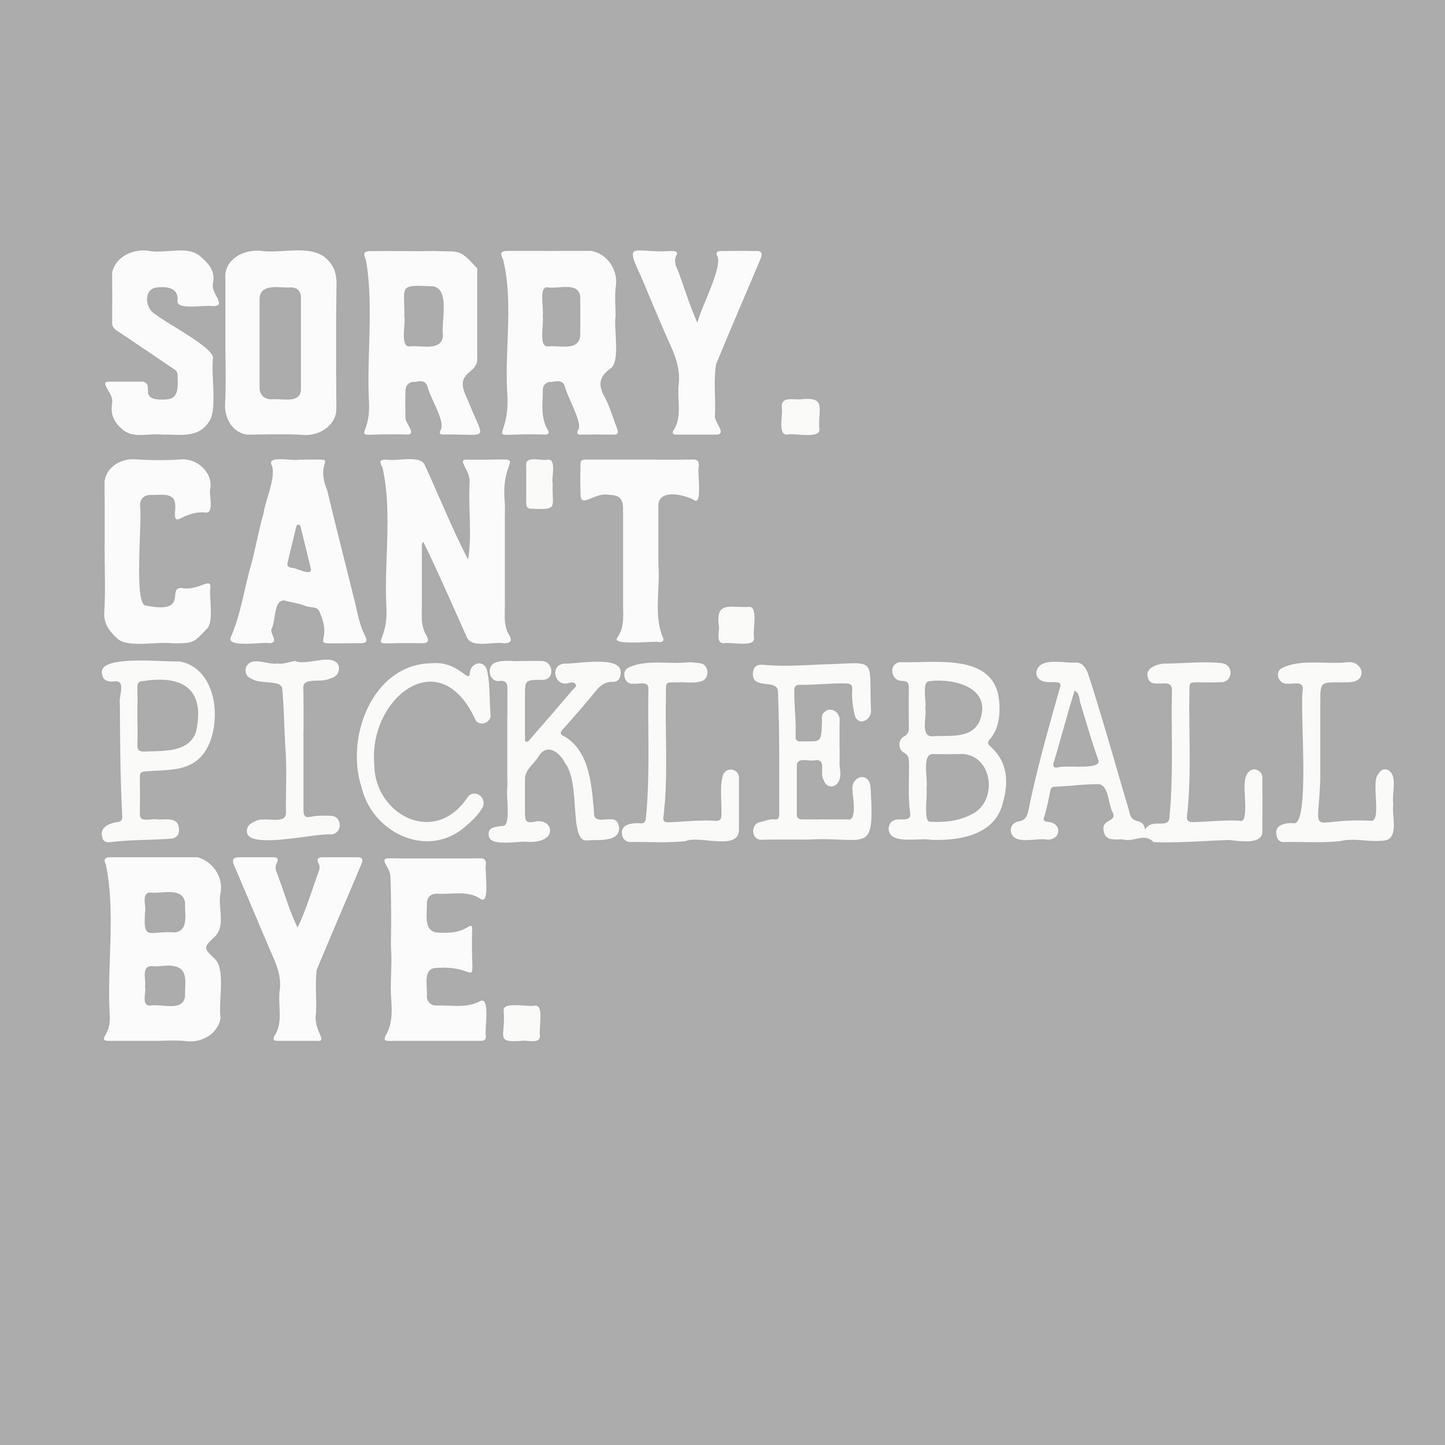 Sorry Can't Pickleball Bye | Men's Sleeveless Athletic Shirt | 100% Polyester